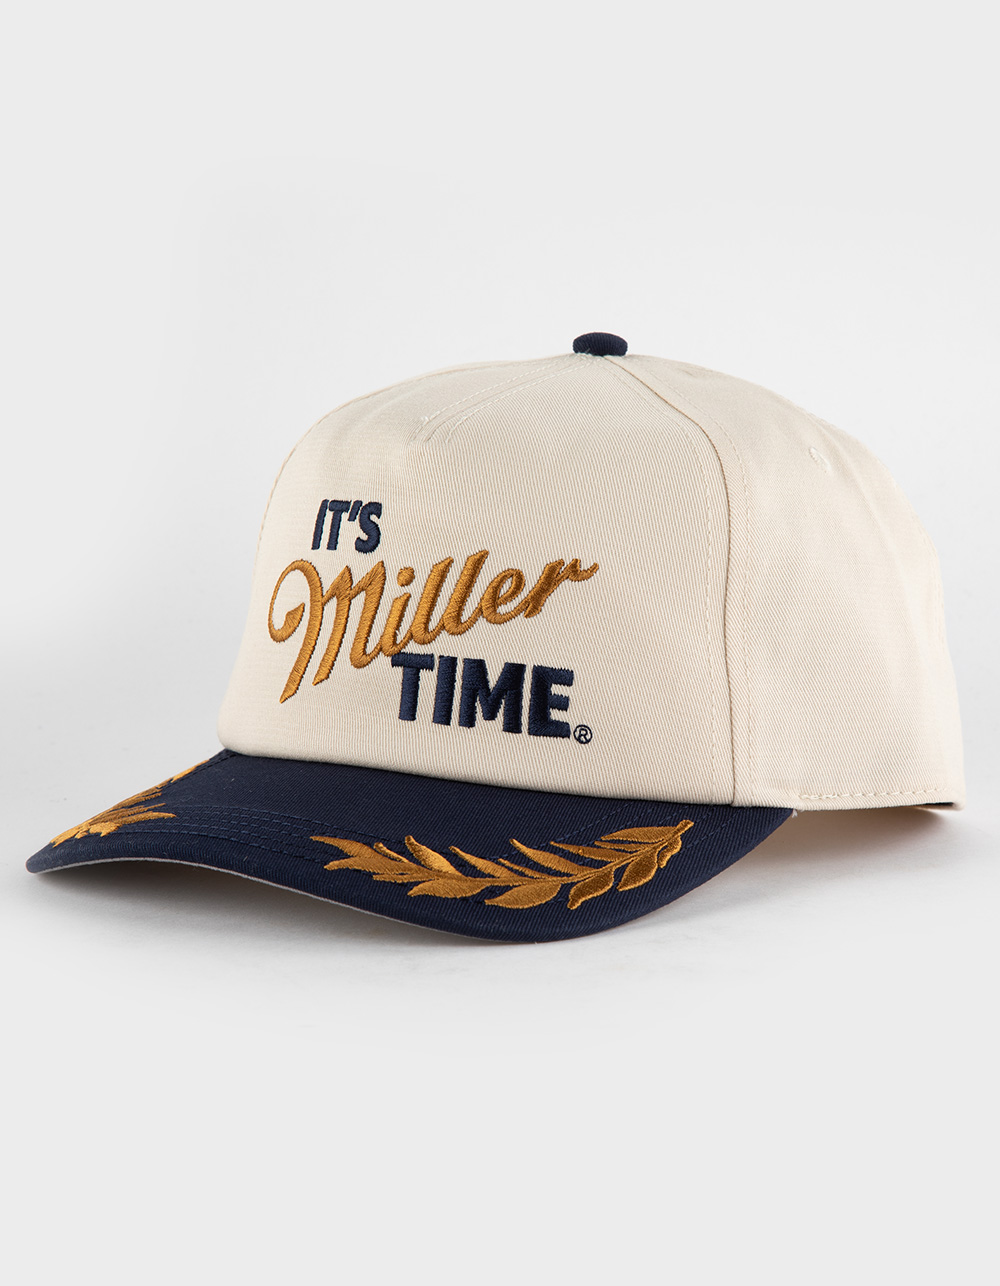 AMERICAN NEEDLE Miller Time Snapback Hat